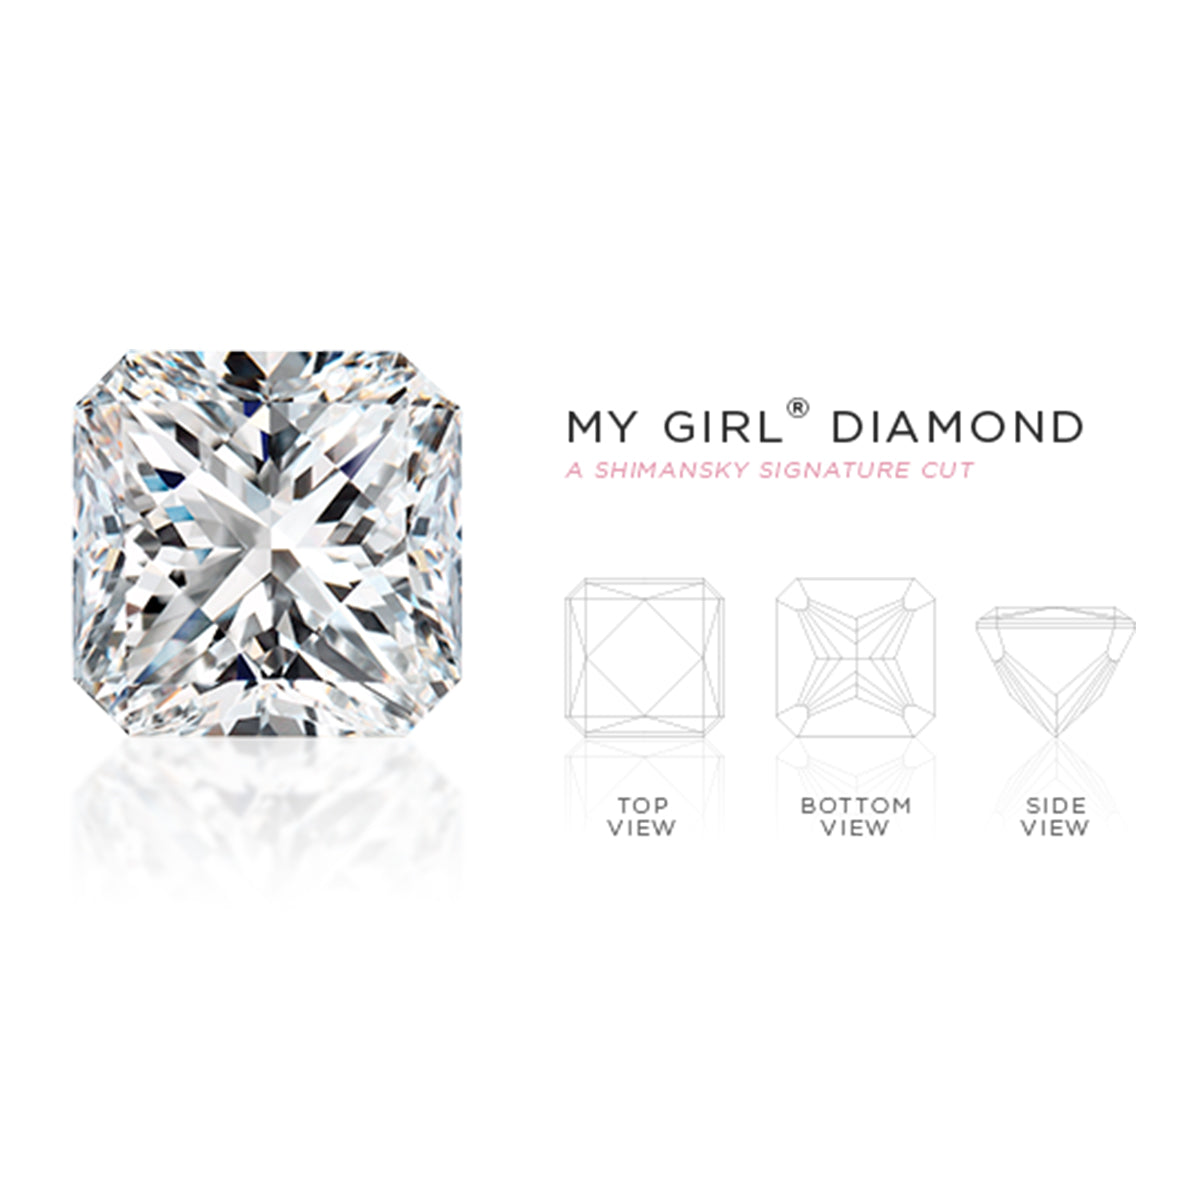 The various views of the Signature Shimansky My Girl Diamond Cut